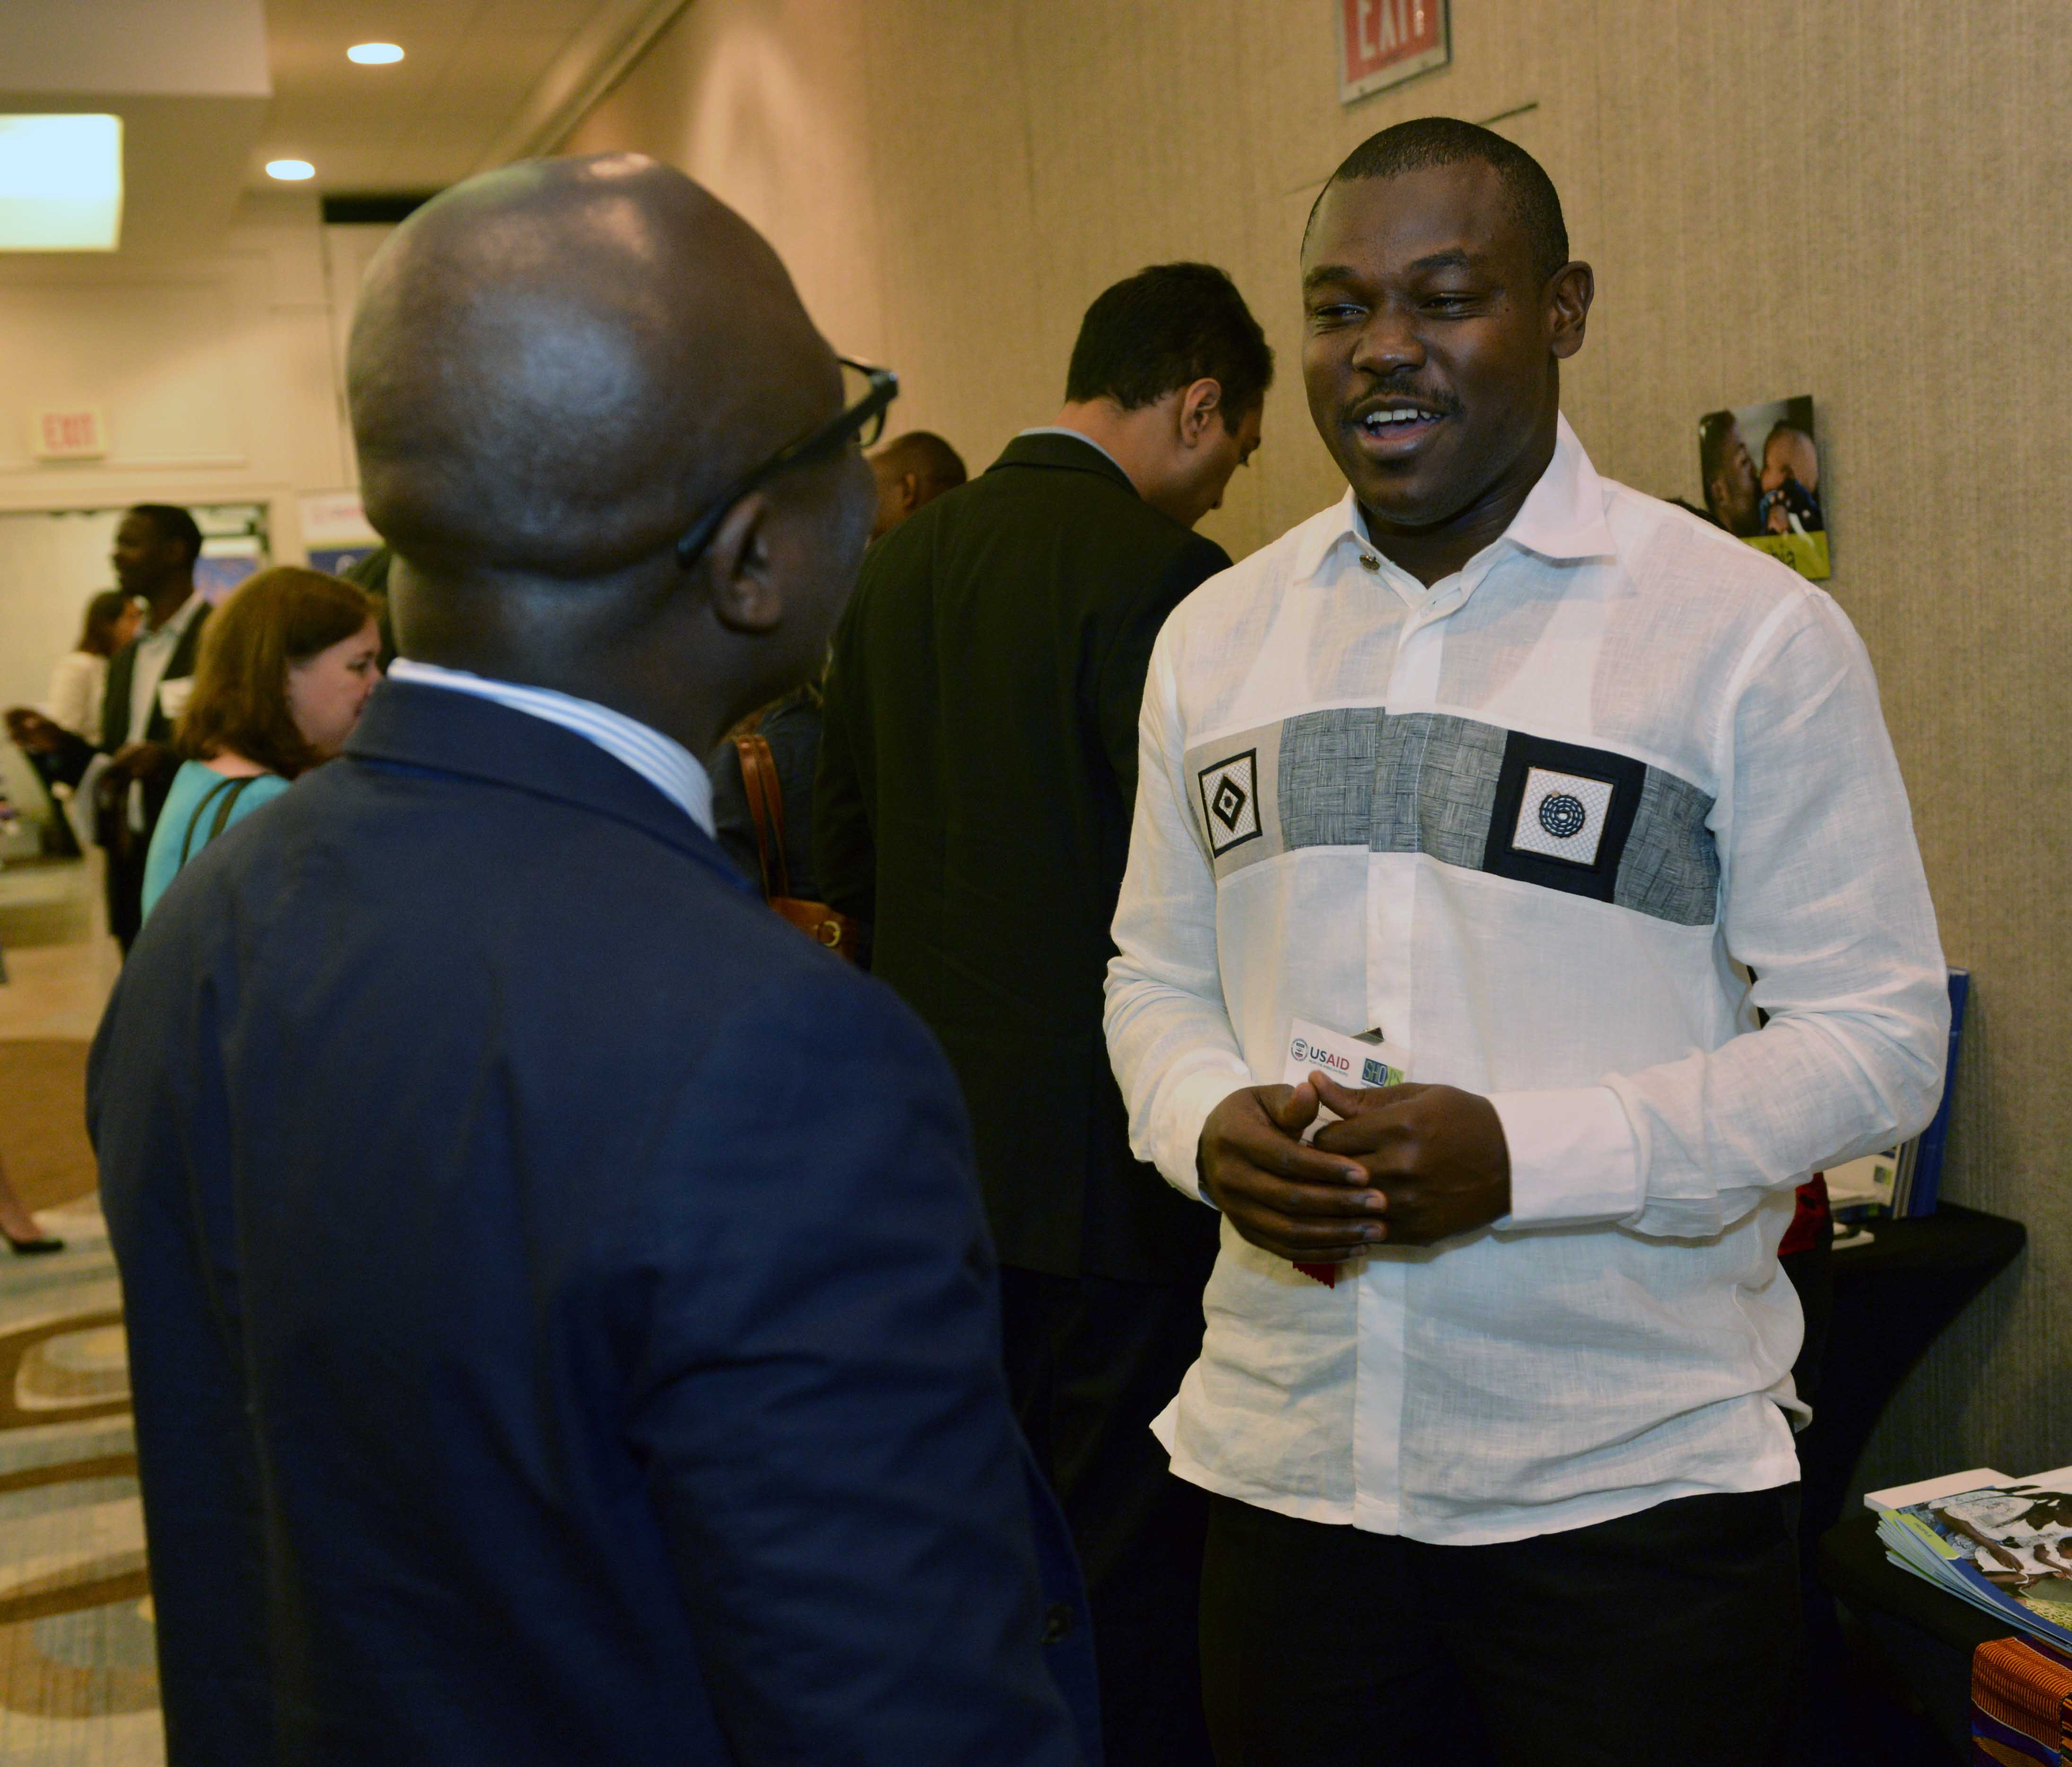 Joseph Addo-Yobo talks to a meeting attendee